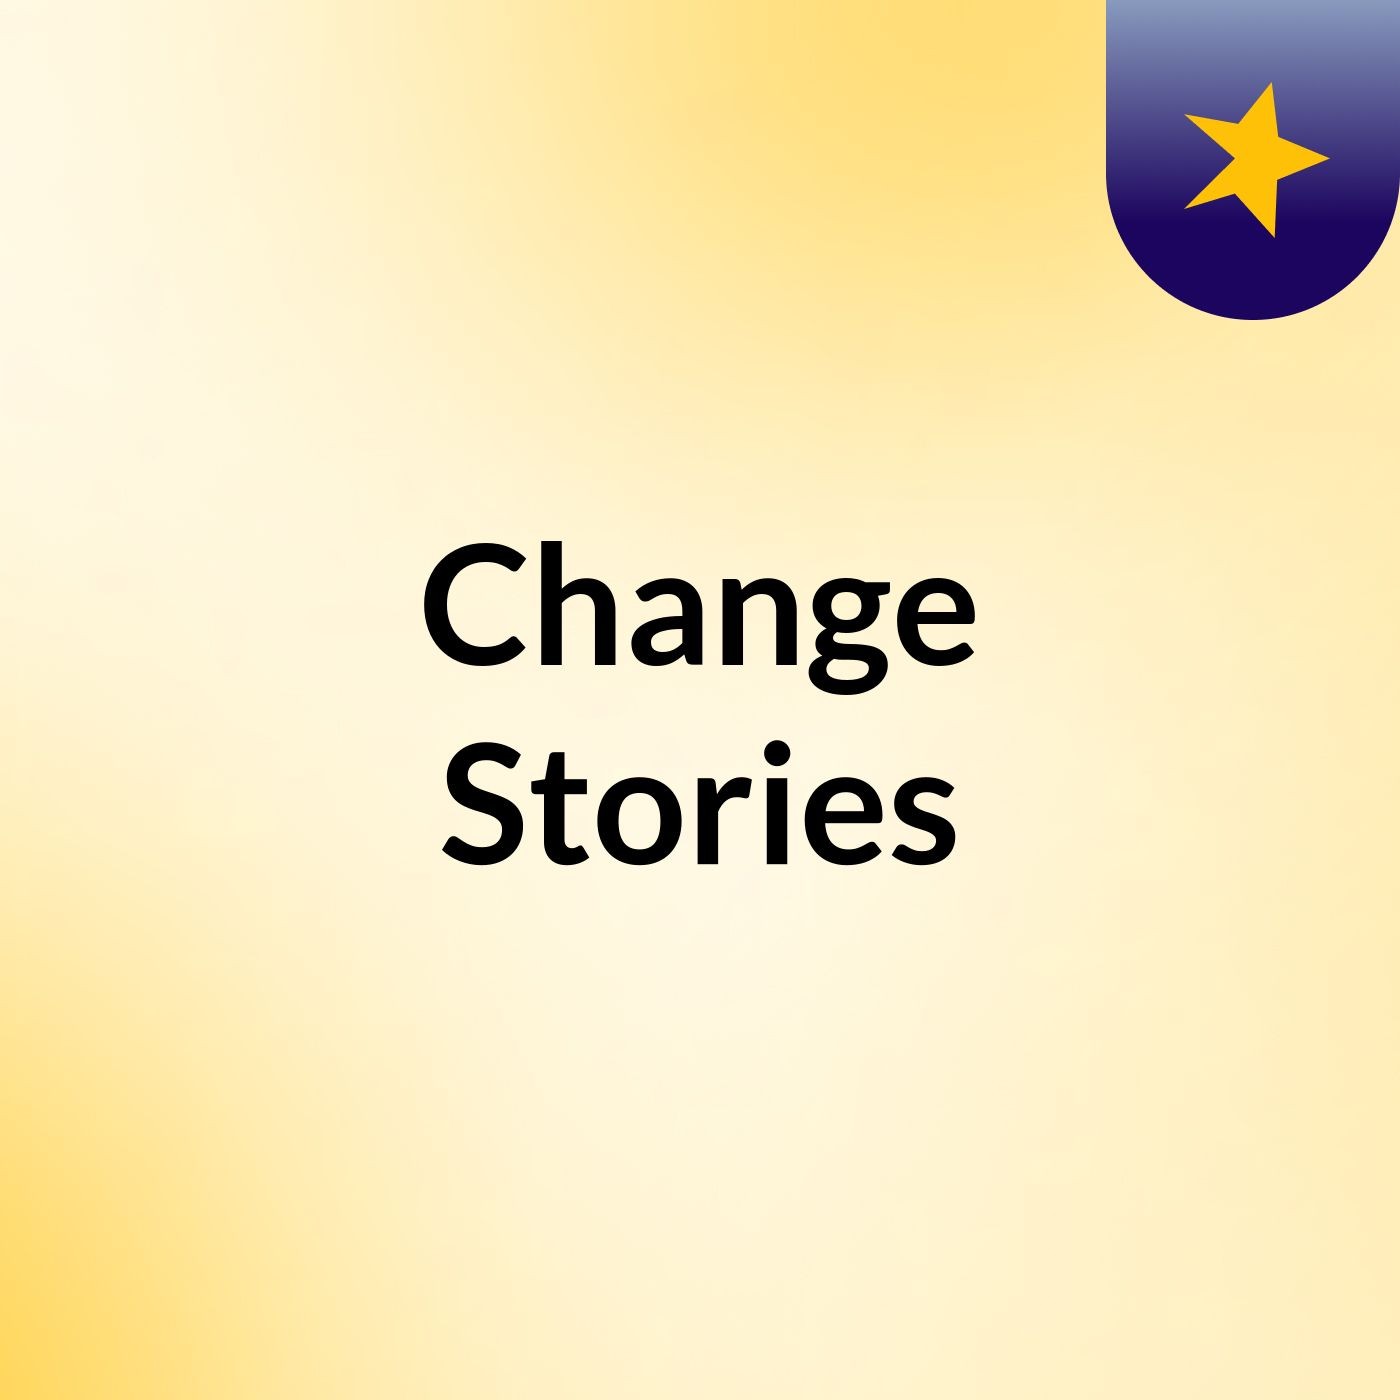 Change Stories